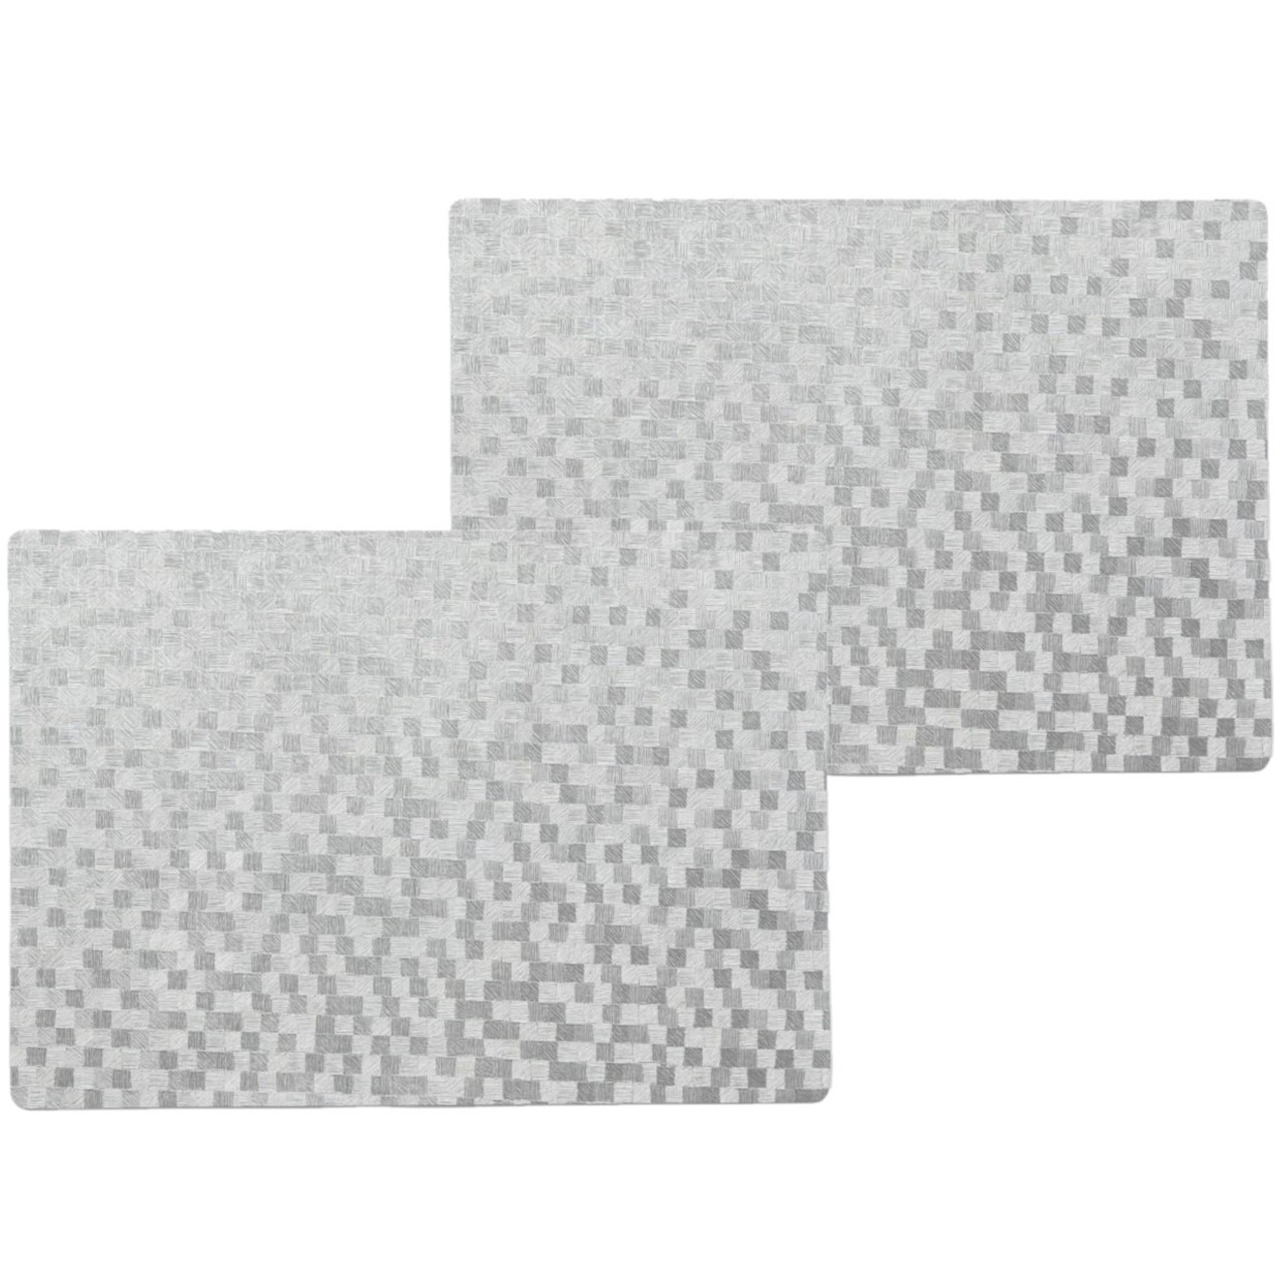 Wicotex 8x stuks stevige luxe Tafel placemats Stones zilver 30 x 43 cm -